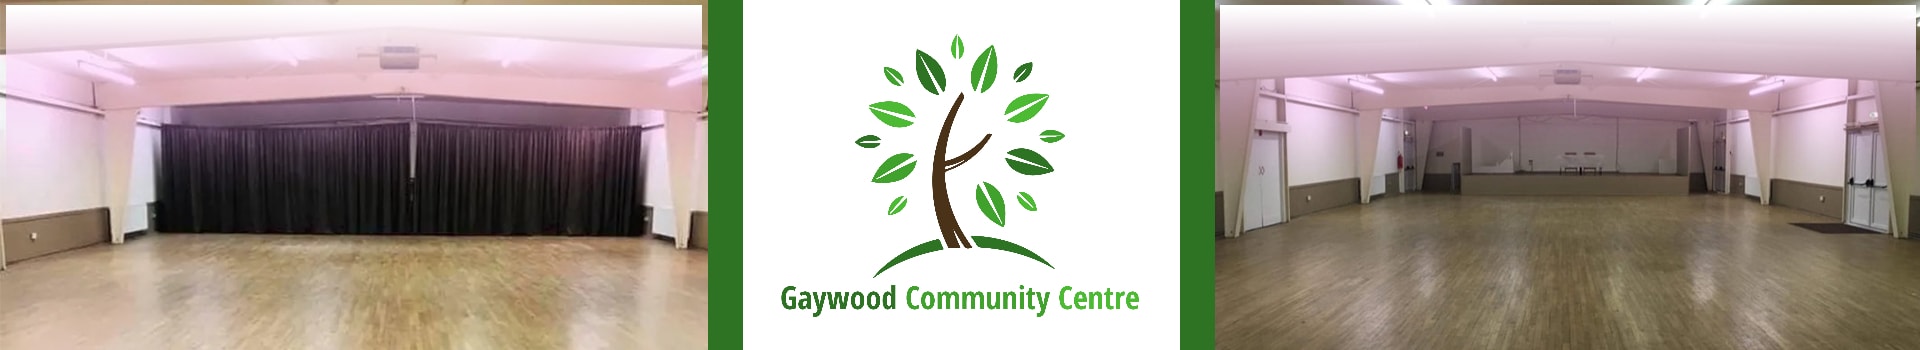 Gaywood Community Centre